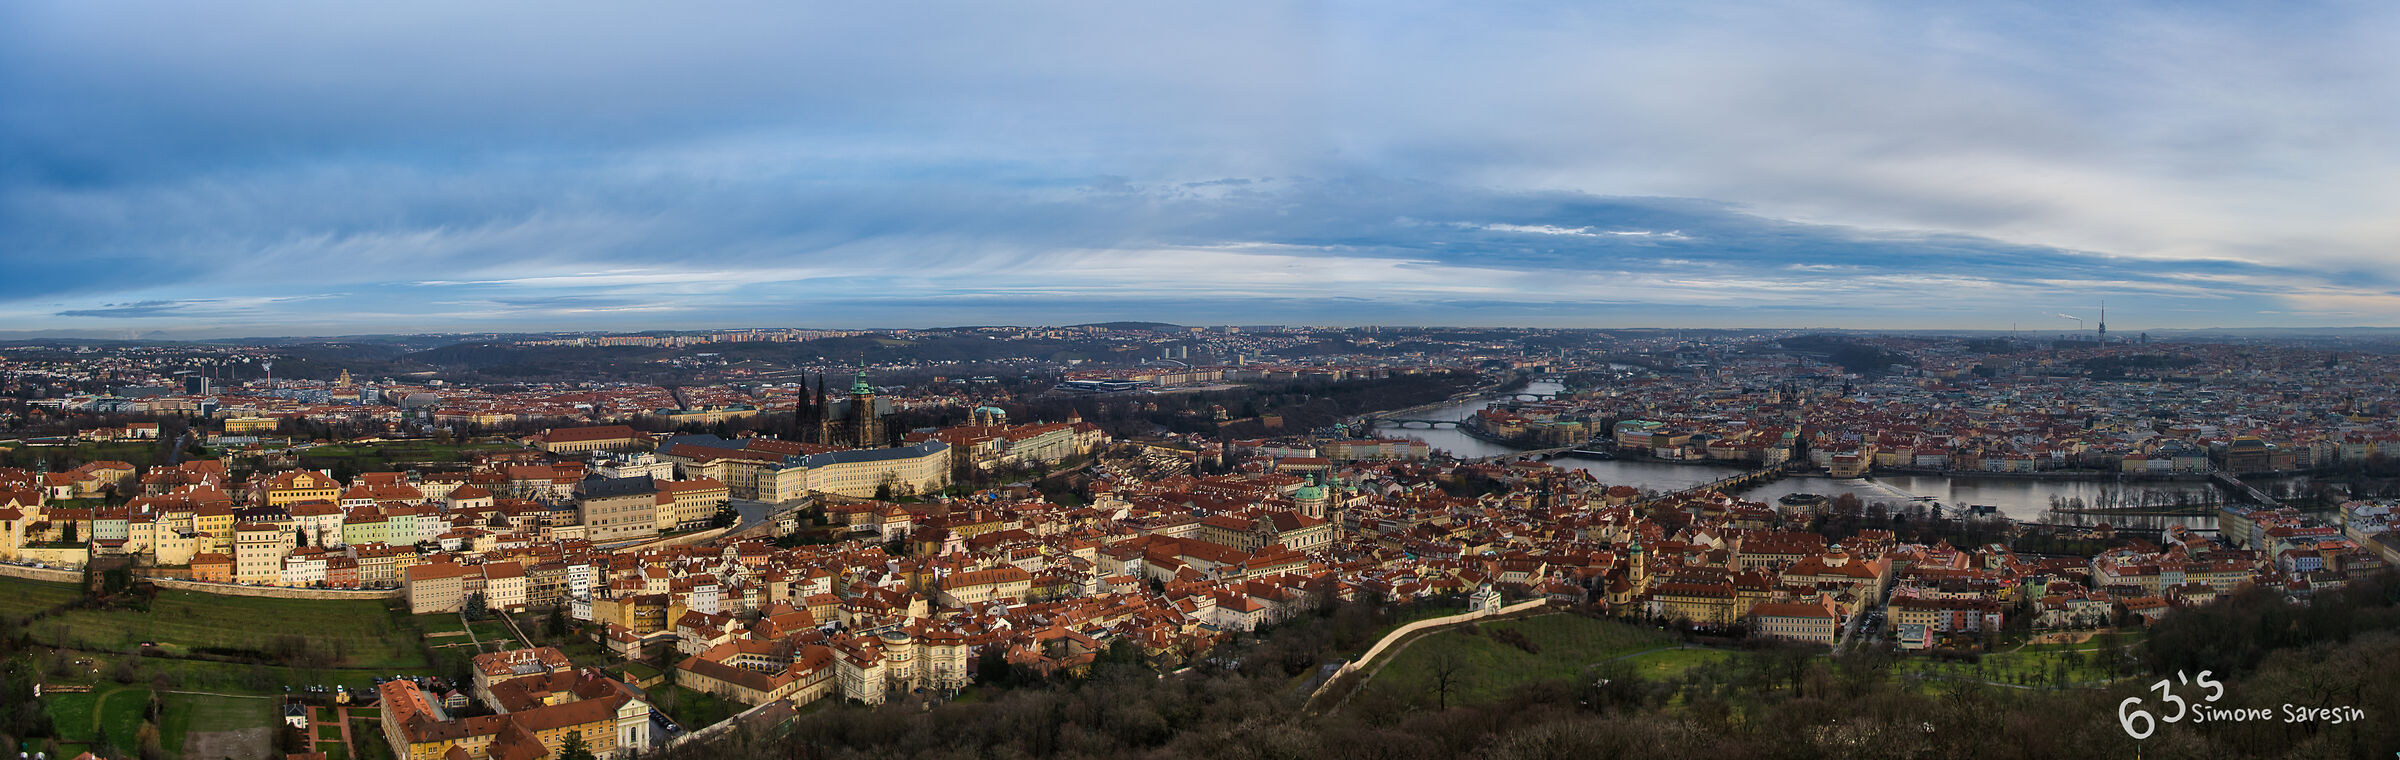 Praga Panorama aereo...